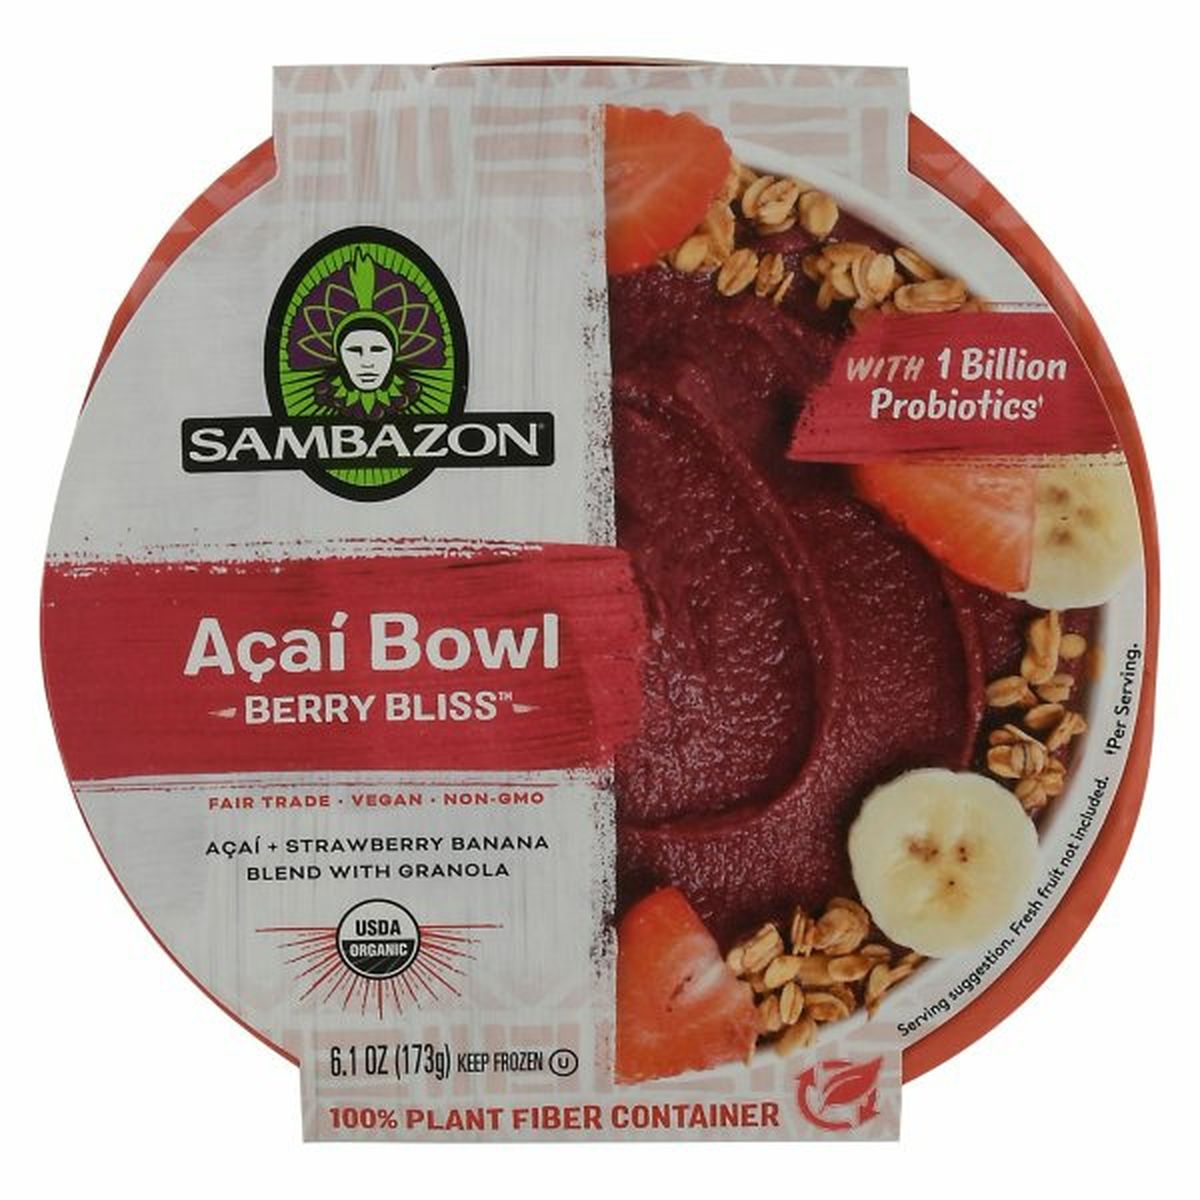 Calories in Sambazon Acai Bowl, Berry Bliss